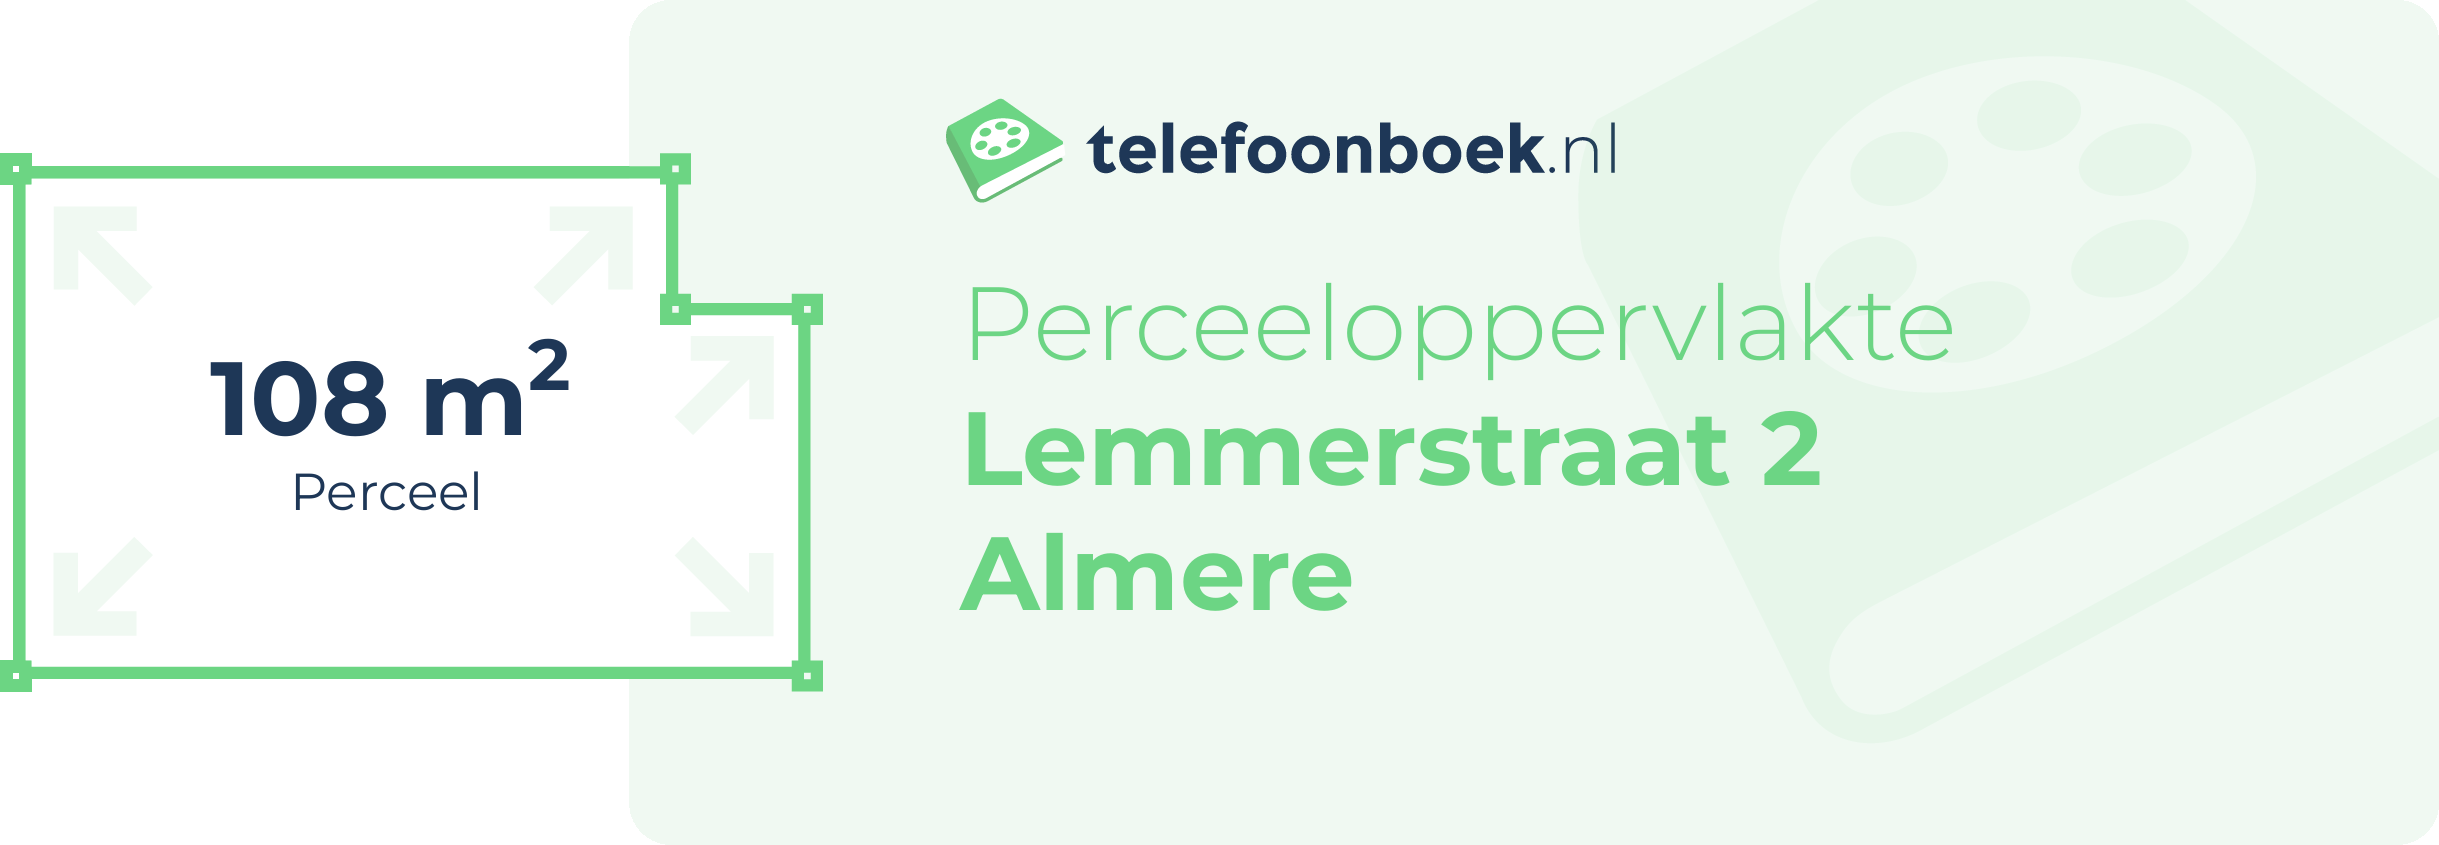 Perceeloppervlakte Lemmerstraat 2 Almere